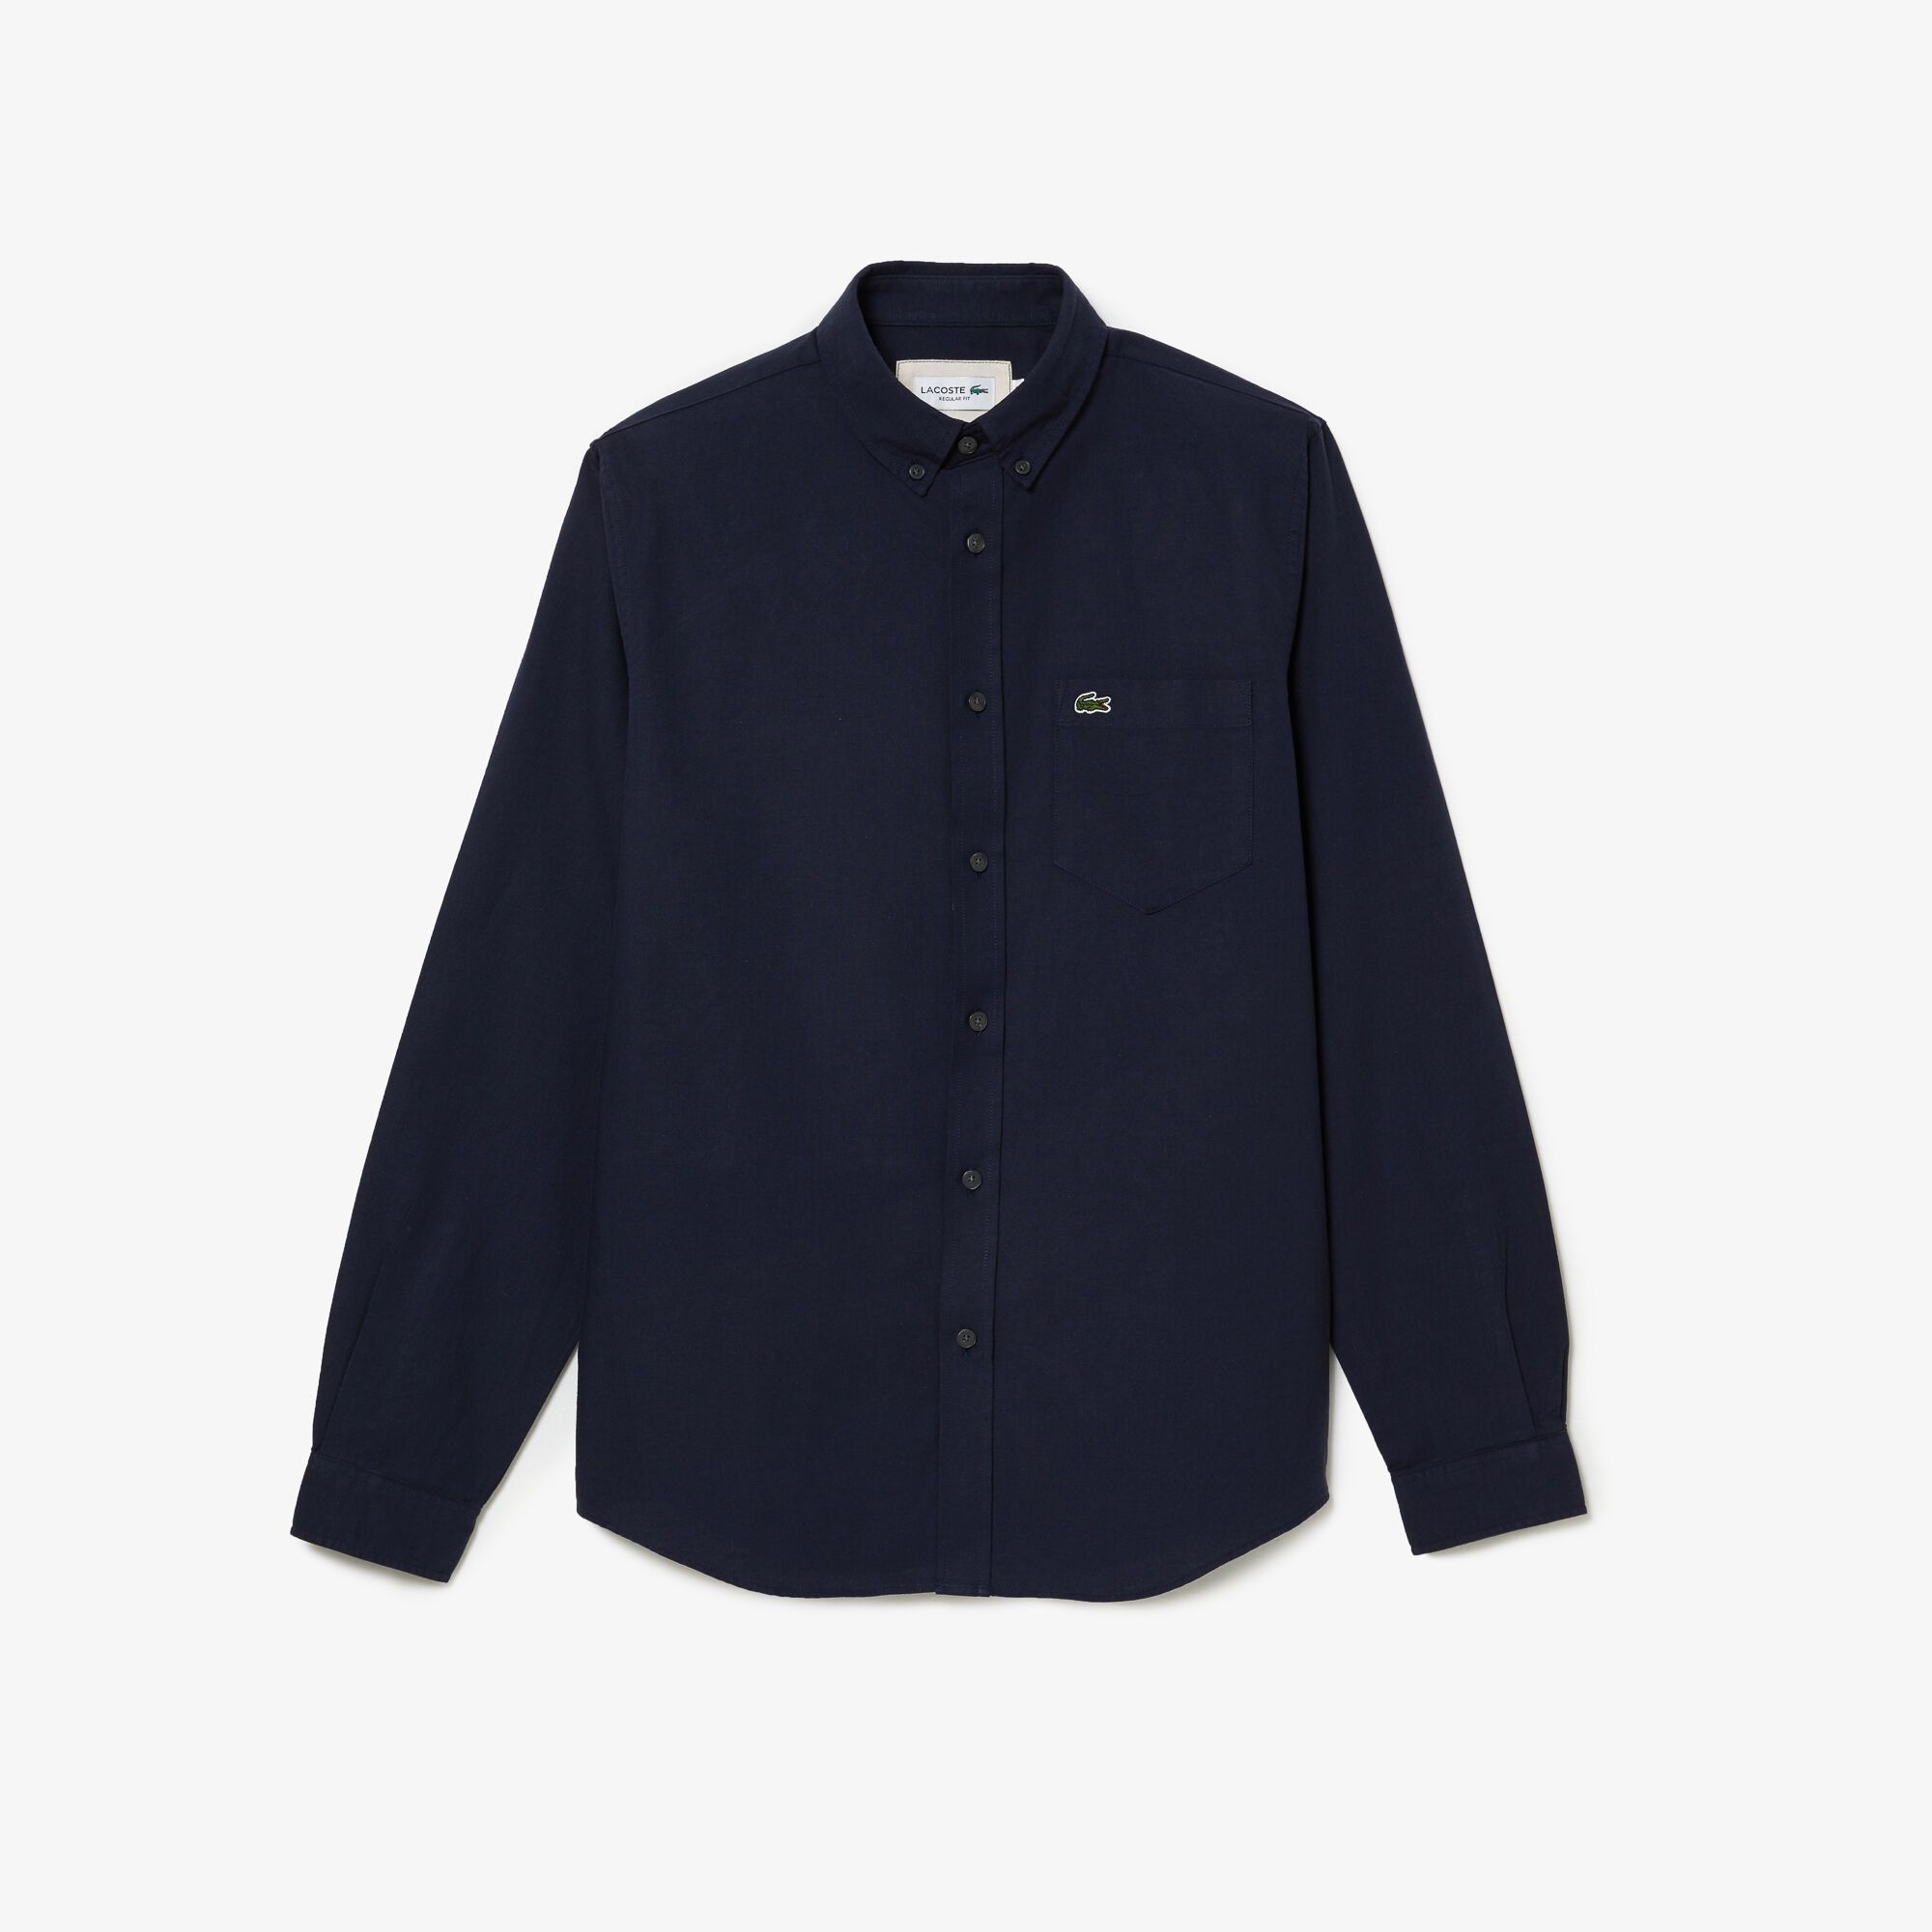  Lacoste Oxford Cotton Shirt - Navy (Regular) 